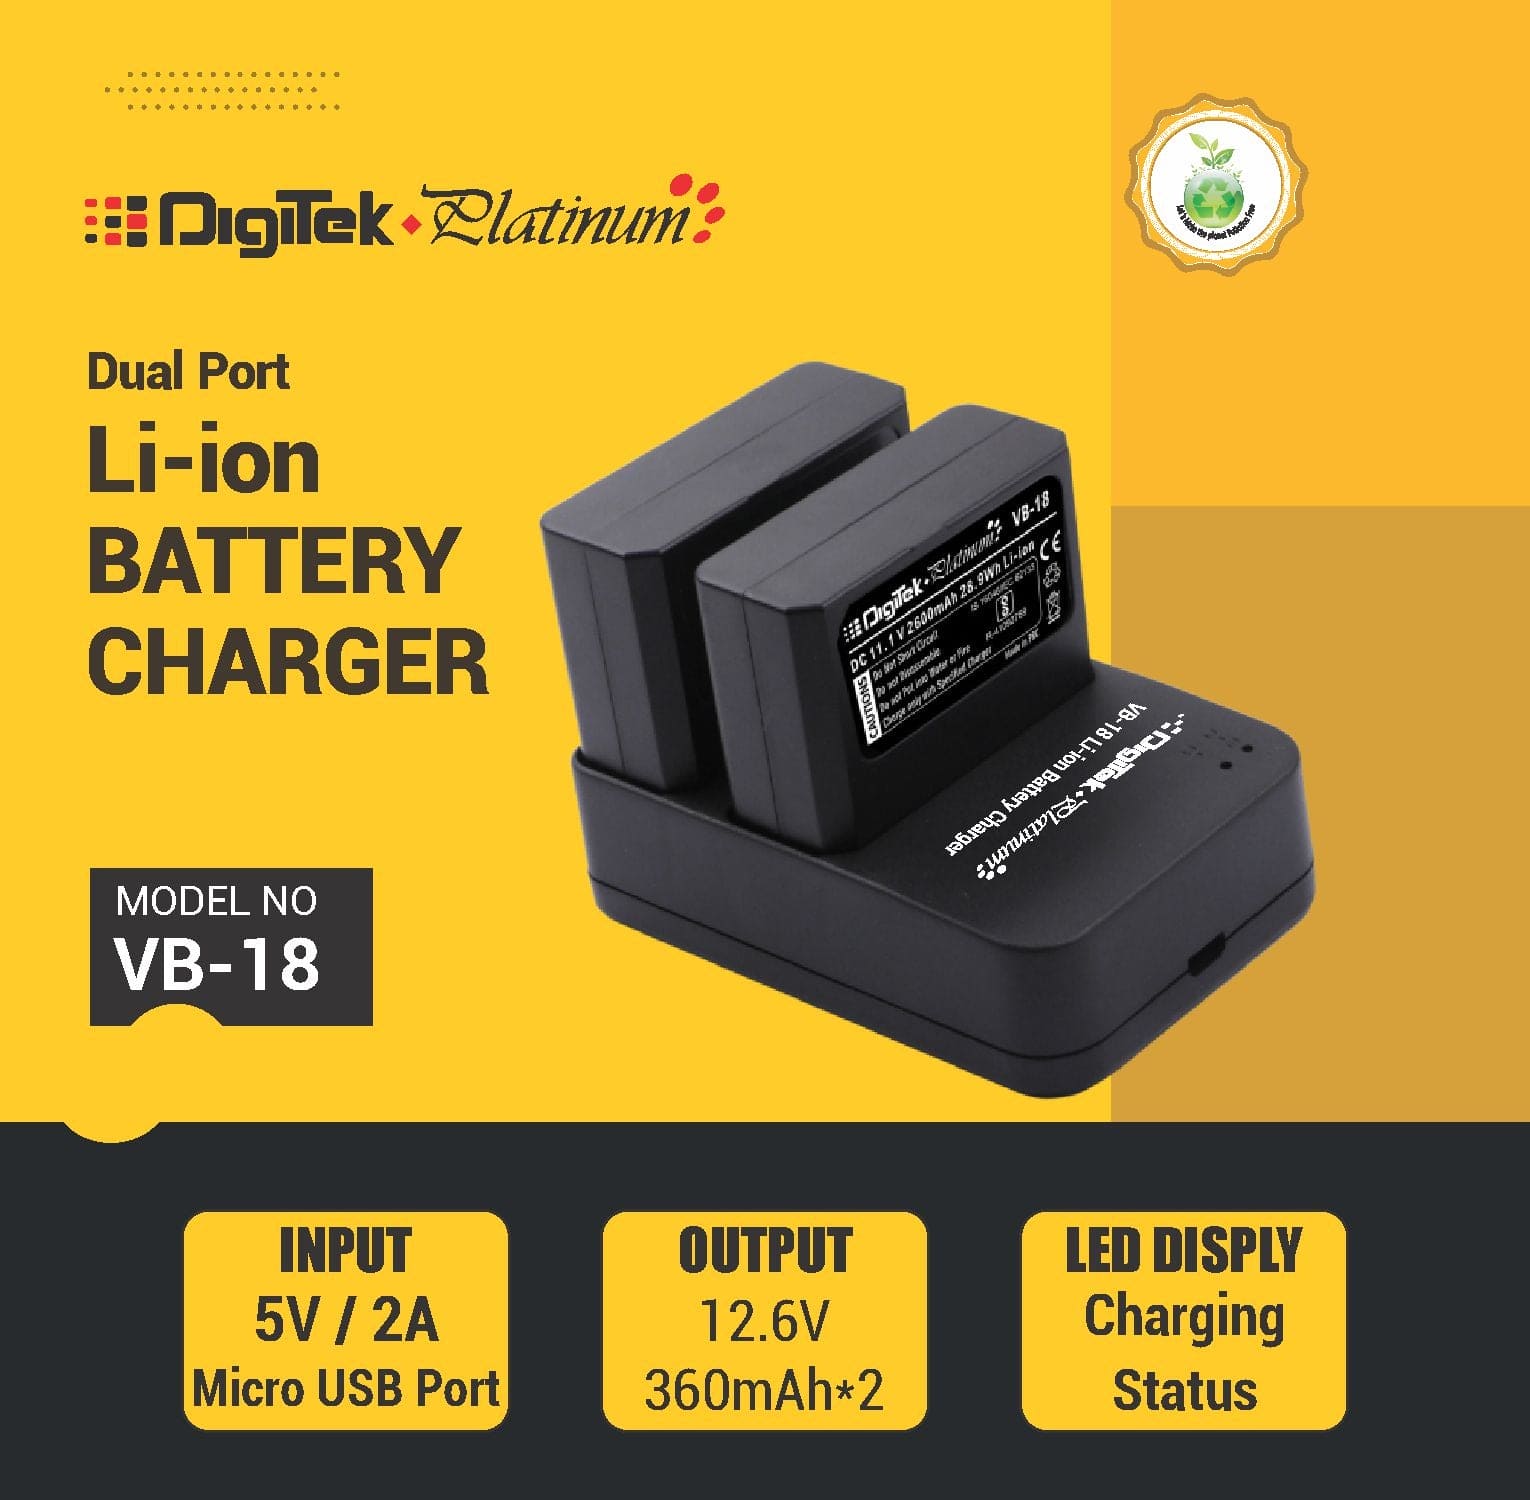 Digitek Platinum Dual Battery Charger VB-18